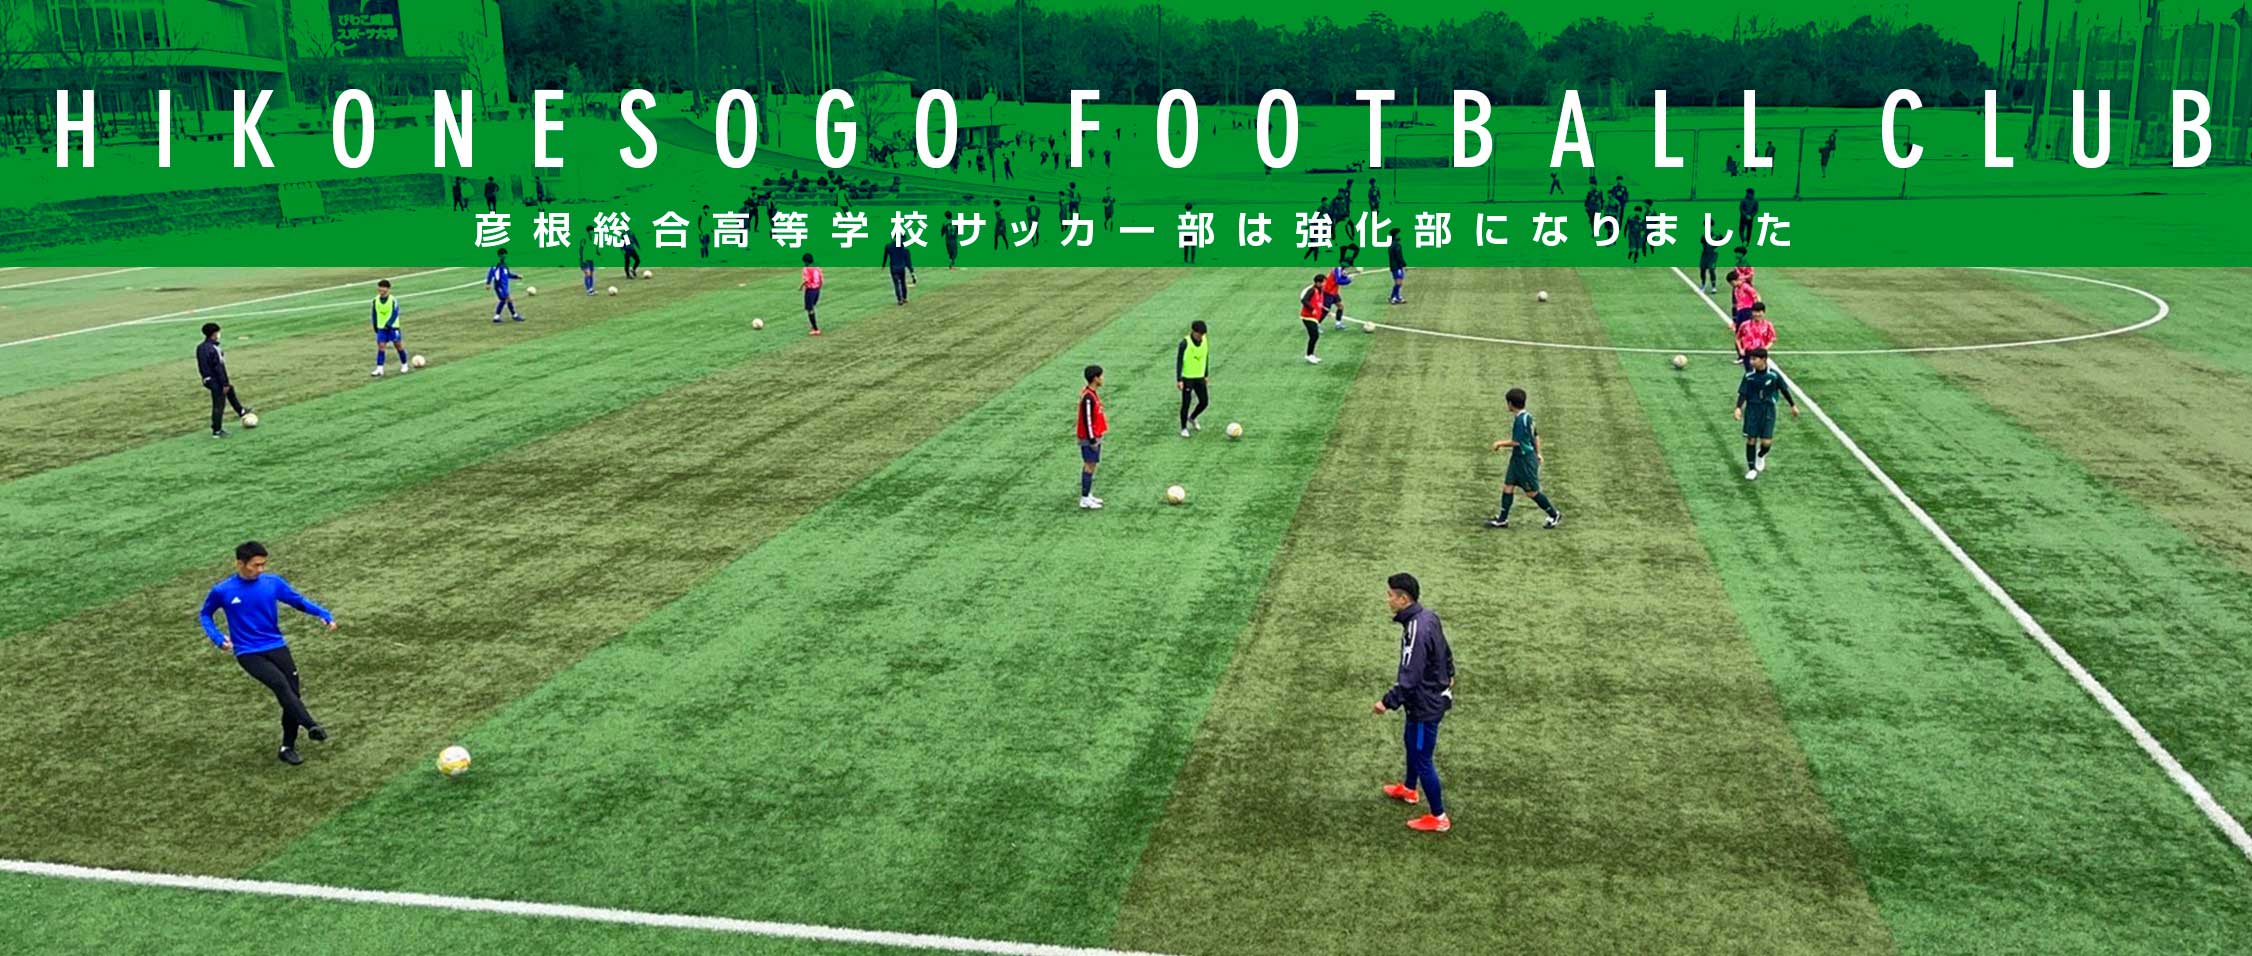 彦根総合高等学校サッカー部